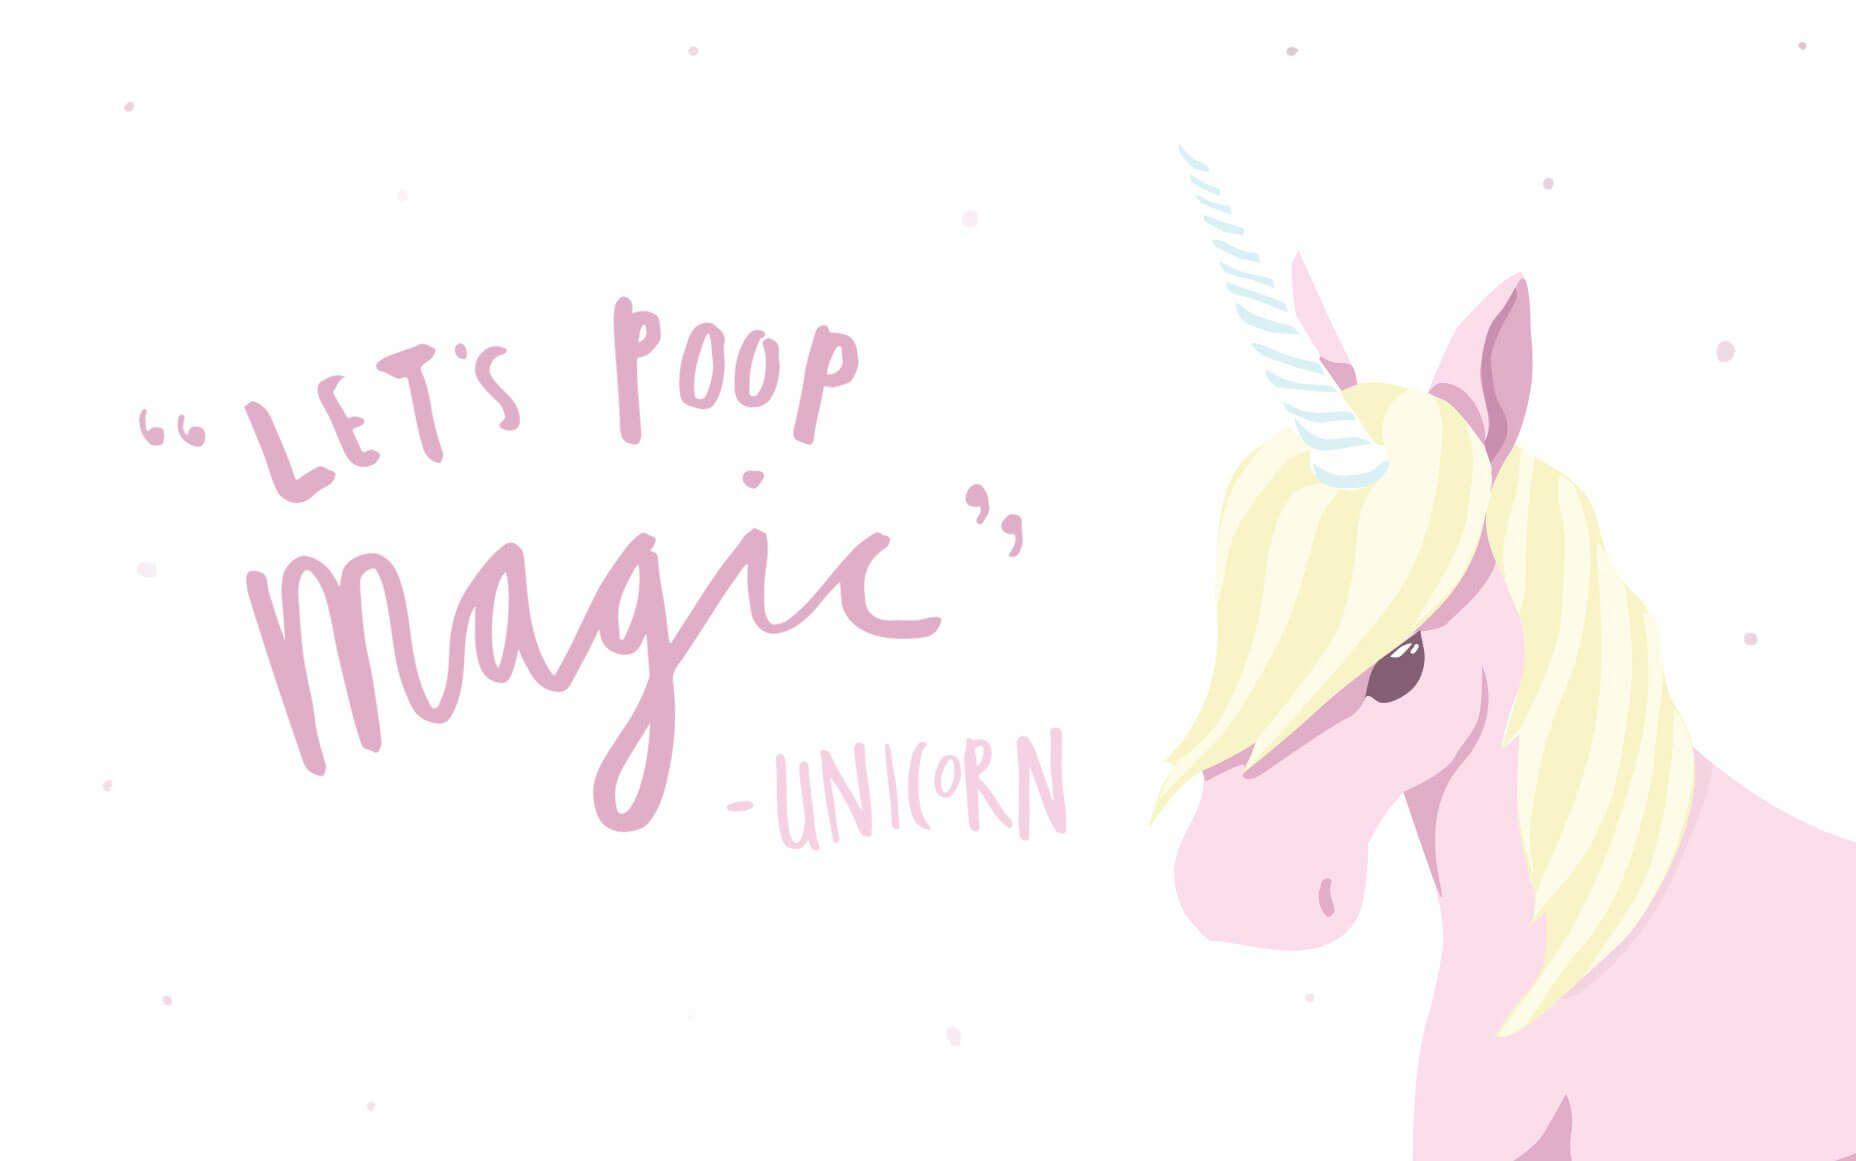 Free Unicorn Wallpaper For Desktop, 39 Unicorn Image